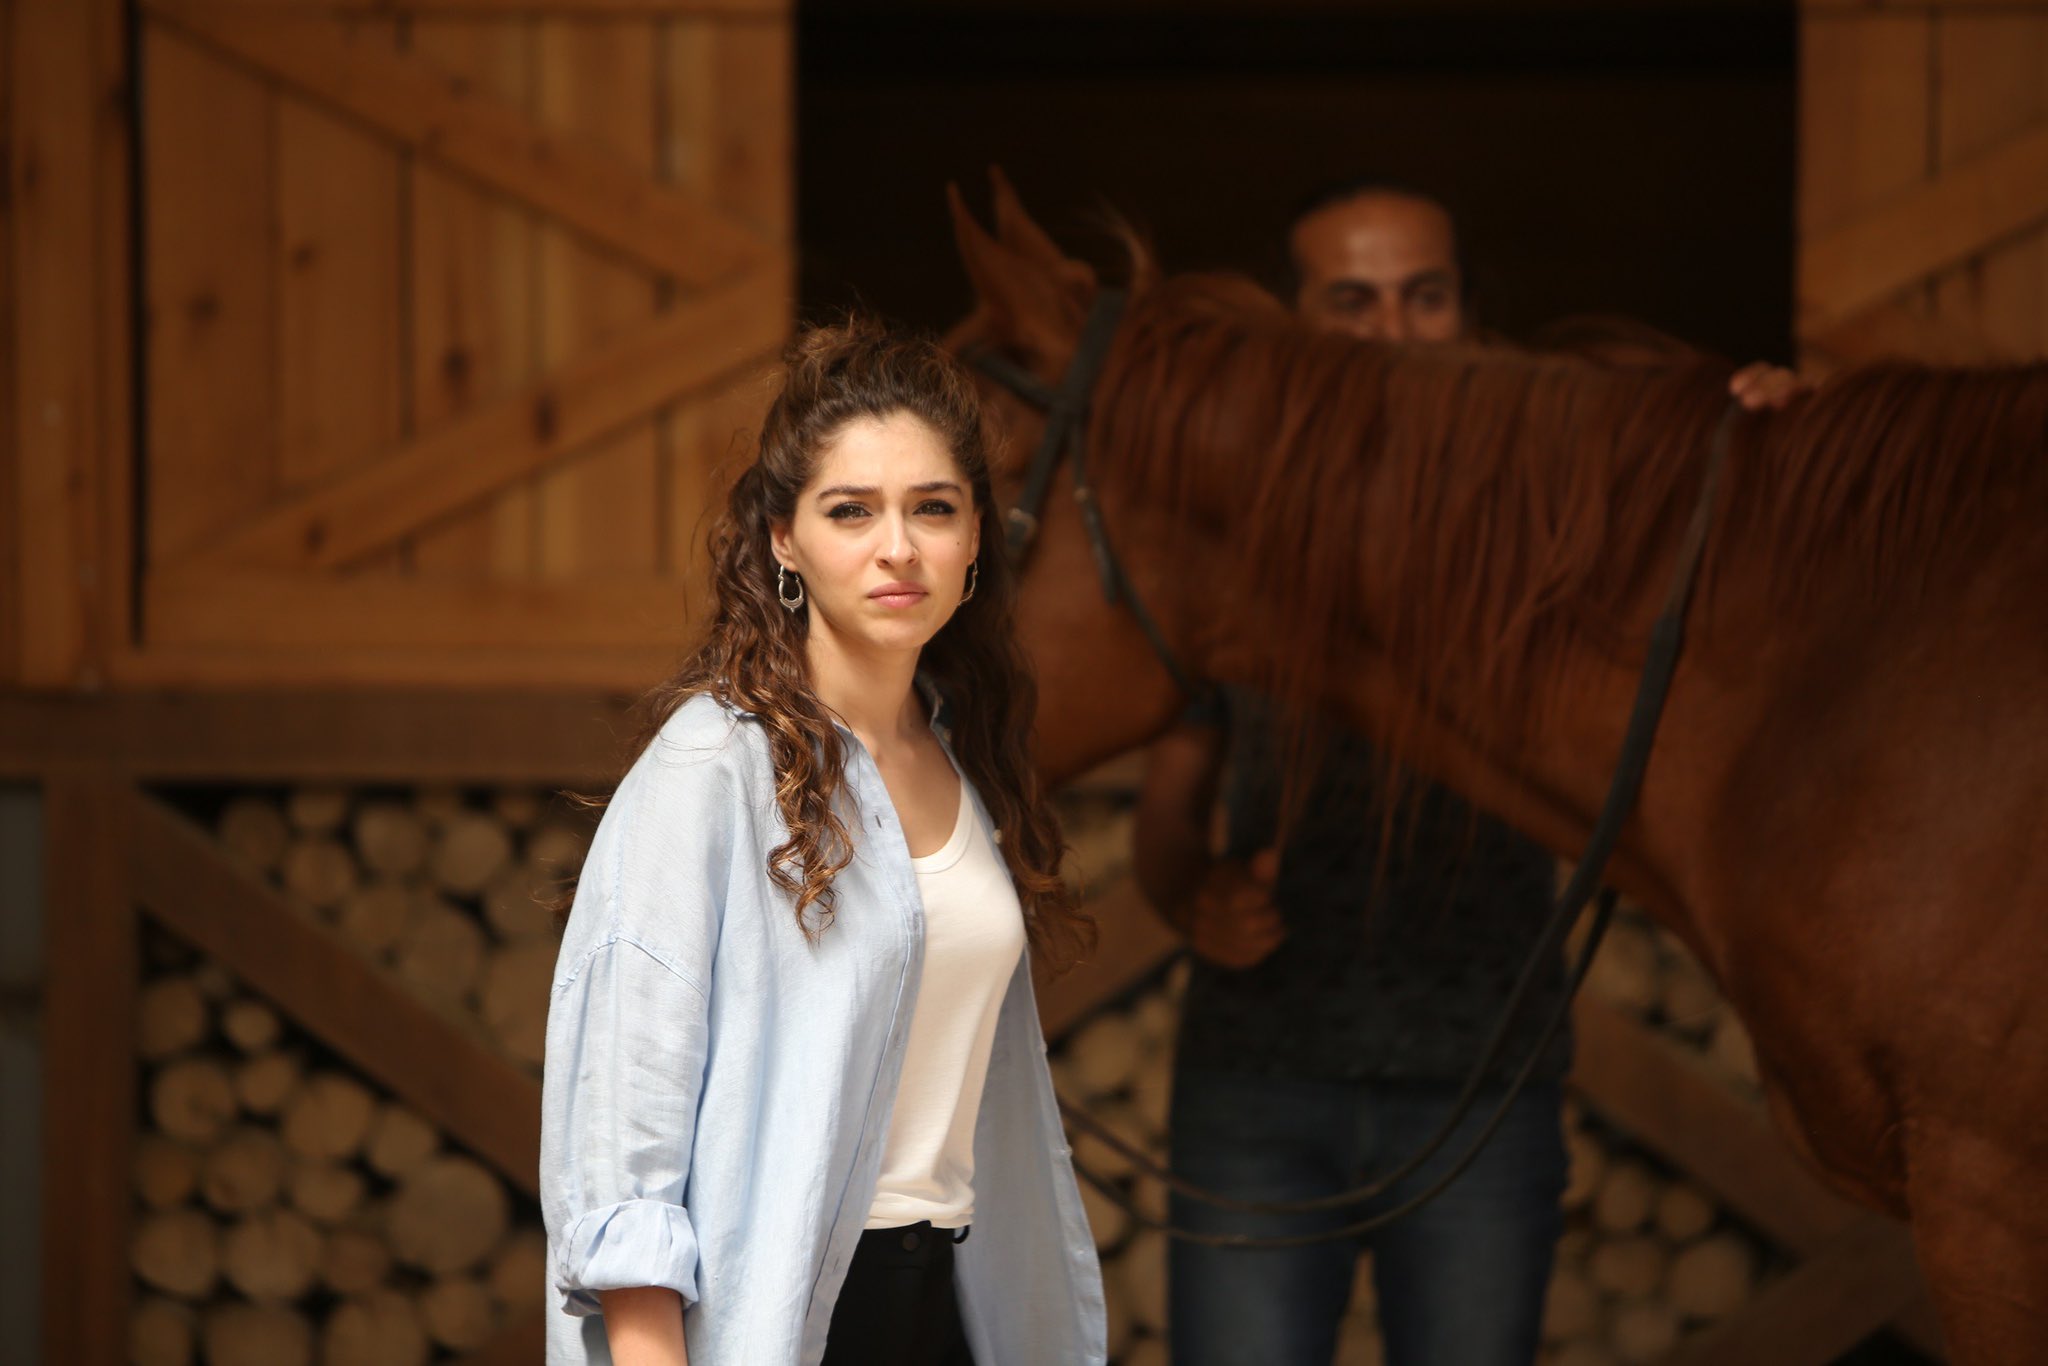 Senden Daha Güzel: la trama della sesta puntata della serie romantica con Cemre Baysel e Burak Çelik